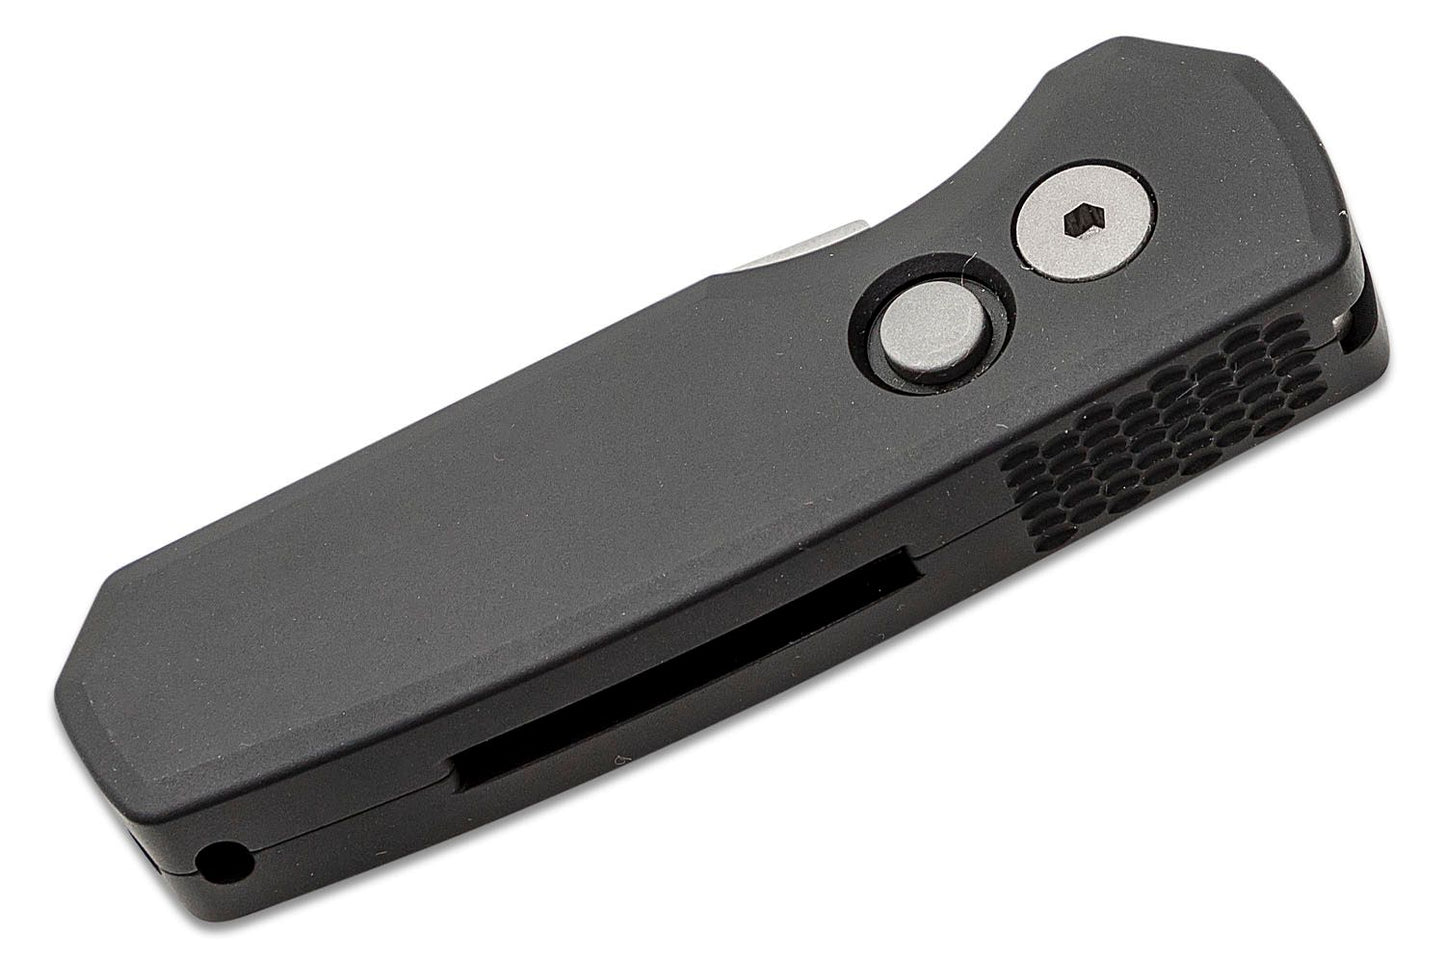 R5301 Runt 5 AUTO Folding Knife 1.94" CPM-MagnaCut Stonewashed Wharncliffe Blade, Black Aluminum Handles